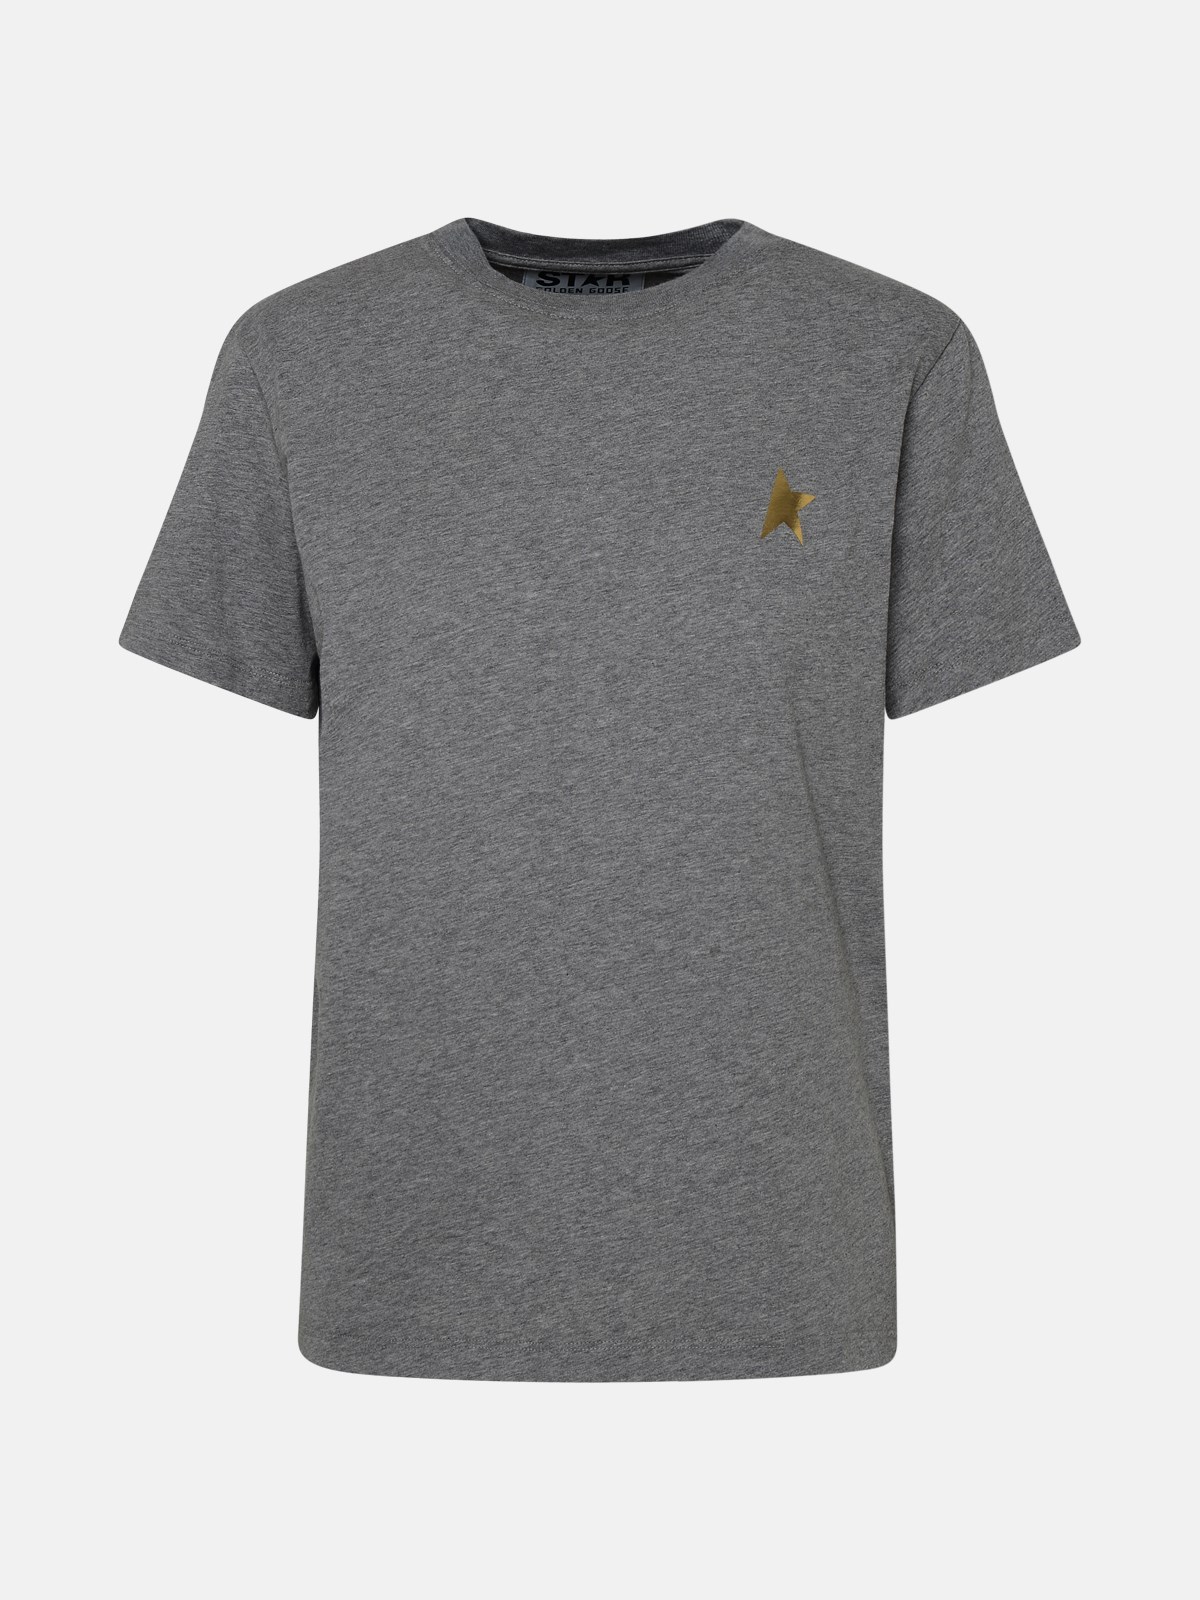 Golden Goose Grey Cotton Star T-shirt